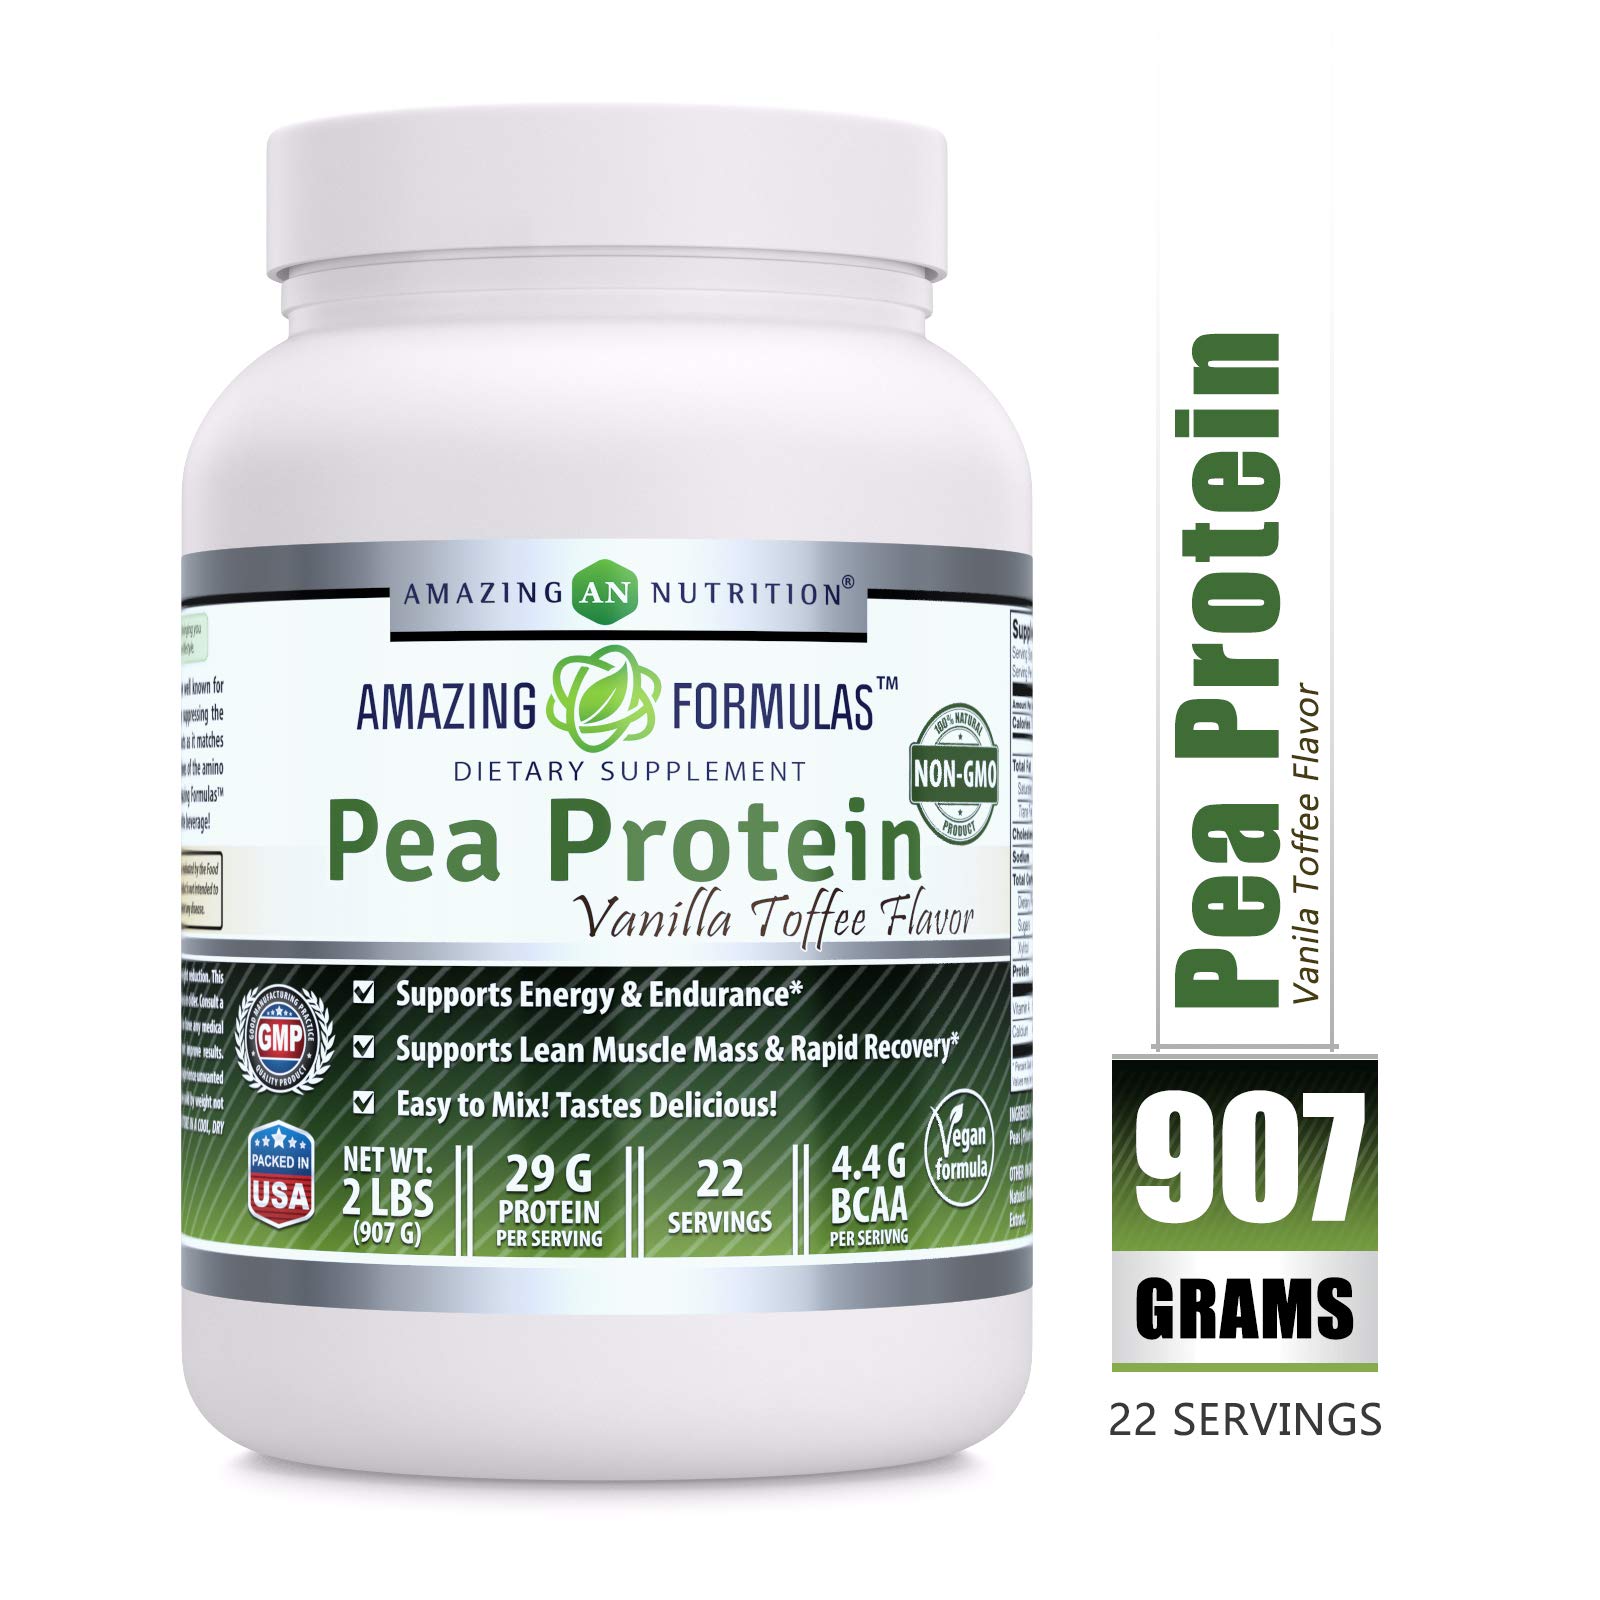 Amazing Formulas 100% Pure Protein Dietary Supplement